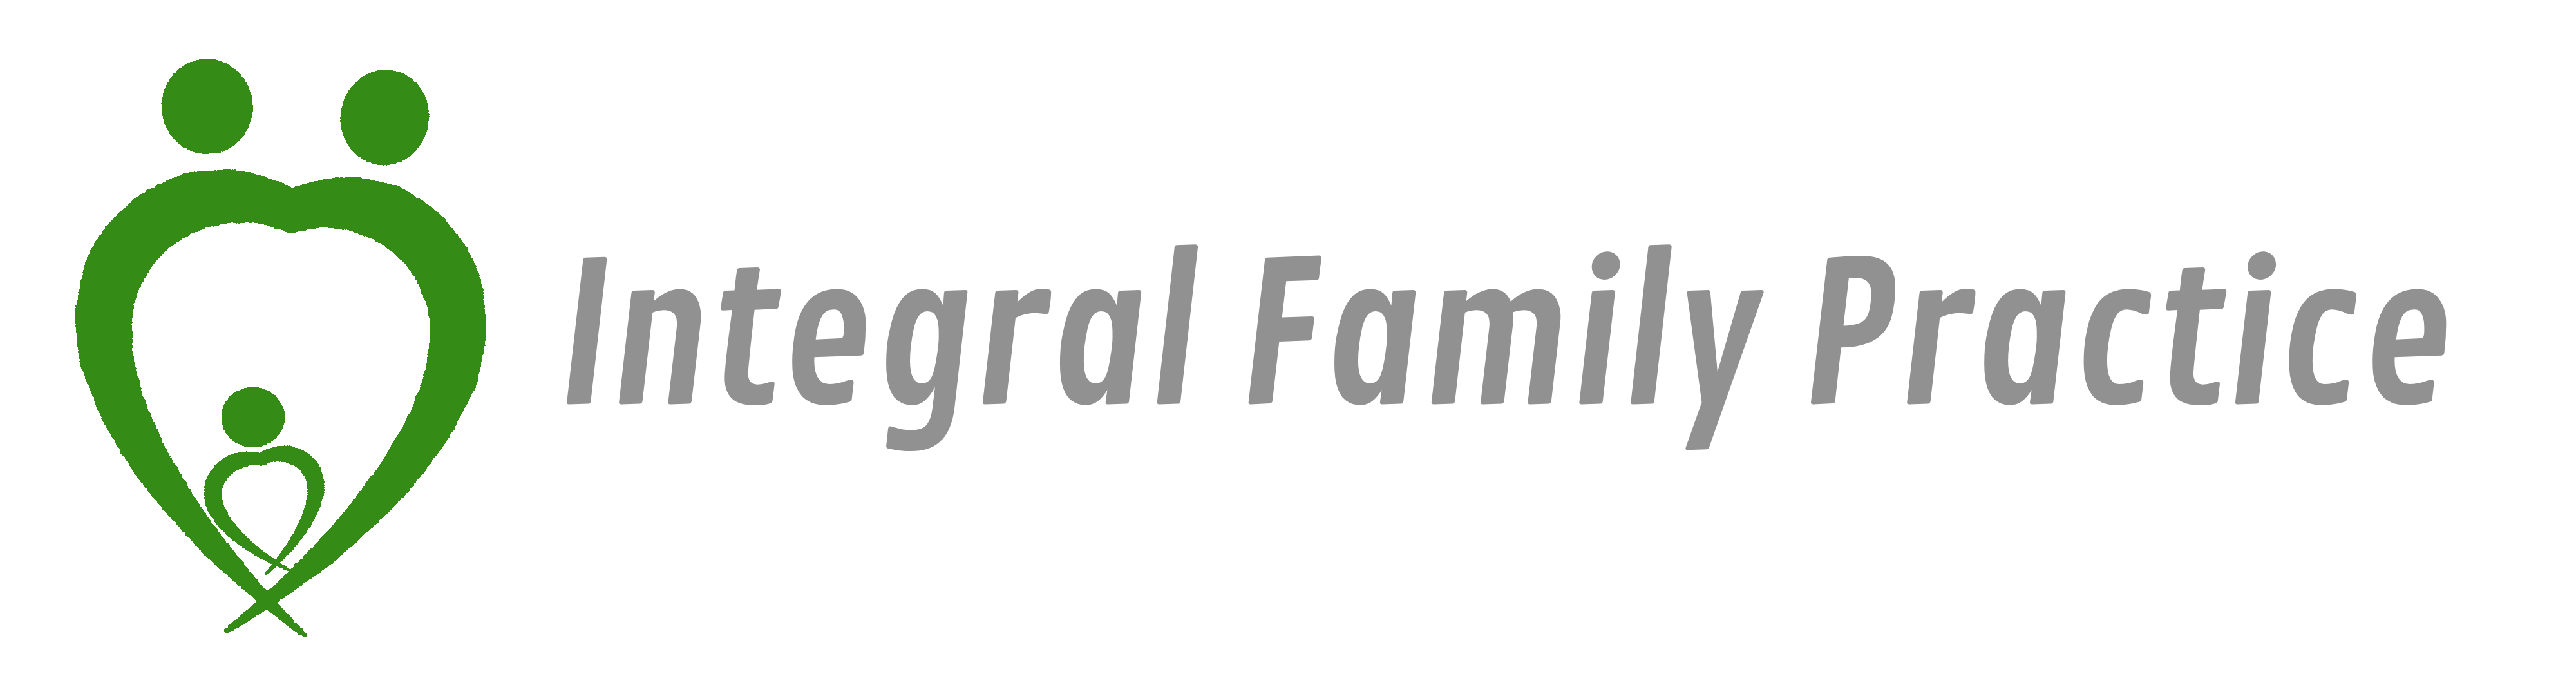 Integral Family Practice